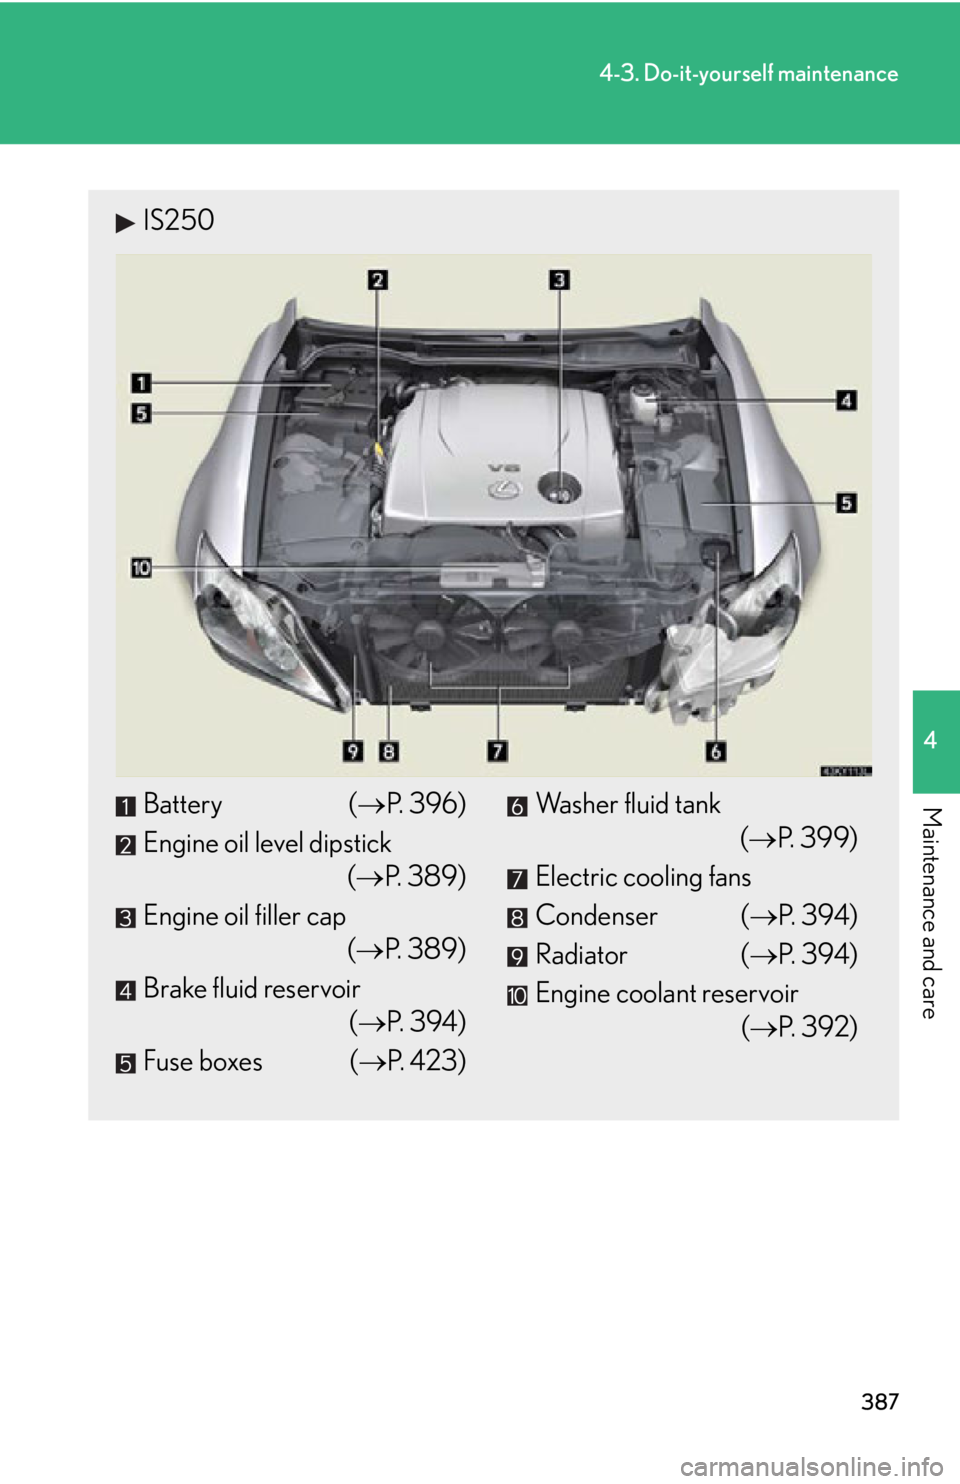 Lexus IS250 2011  Do-It-Yourself Maintenance / LEXUS 2011 IS250/IS350 OWNERS MANUAL (OM53839U) 387
4-3. Do-it-yourself maintenance
4
Maintenance and care
IS250
Battery (P. 396)
Engine oil level dipstick ( P. 389)
Engine oil filler cap ( P. 389)
Brake fluid reservoir (P. 394)
Fuse bo